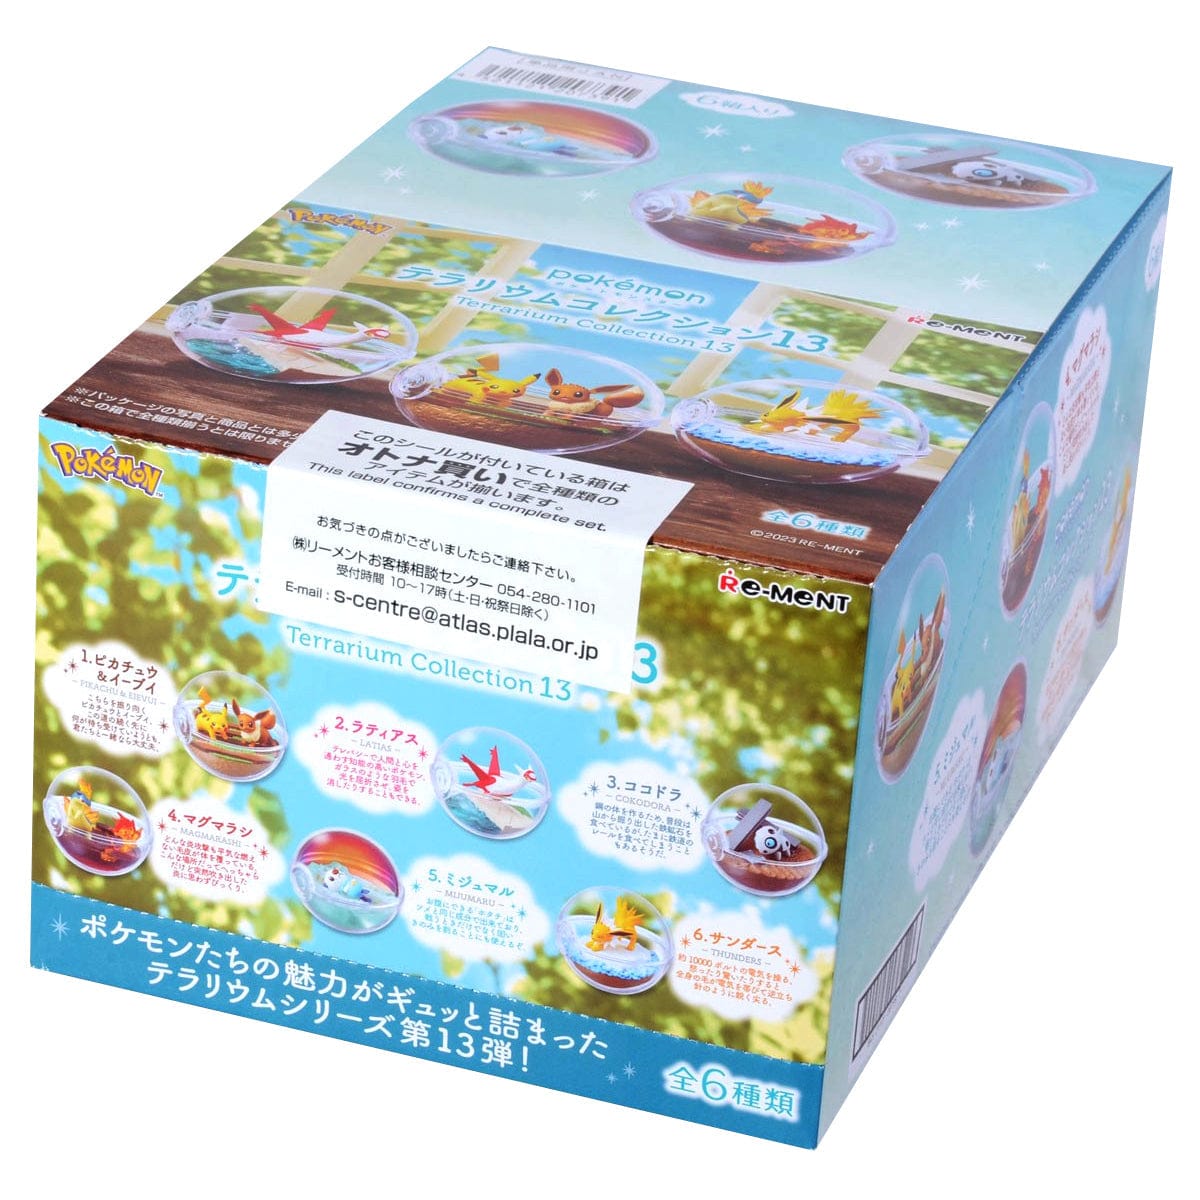 JBK Rement Pokemon Terrarium Collection #13 Surprise Box Kawaii Gifts 4521121207391